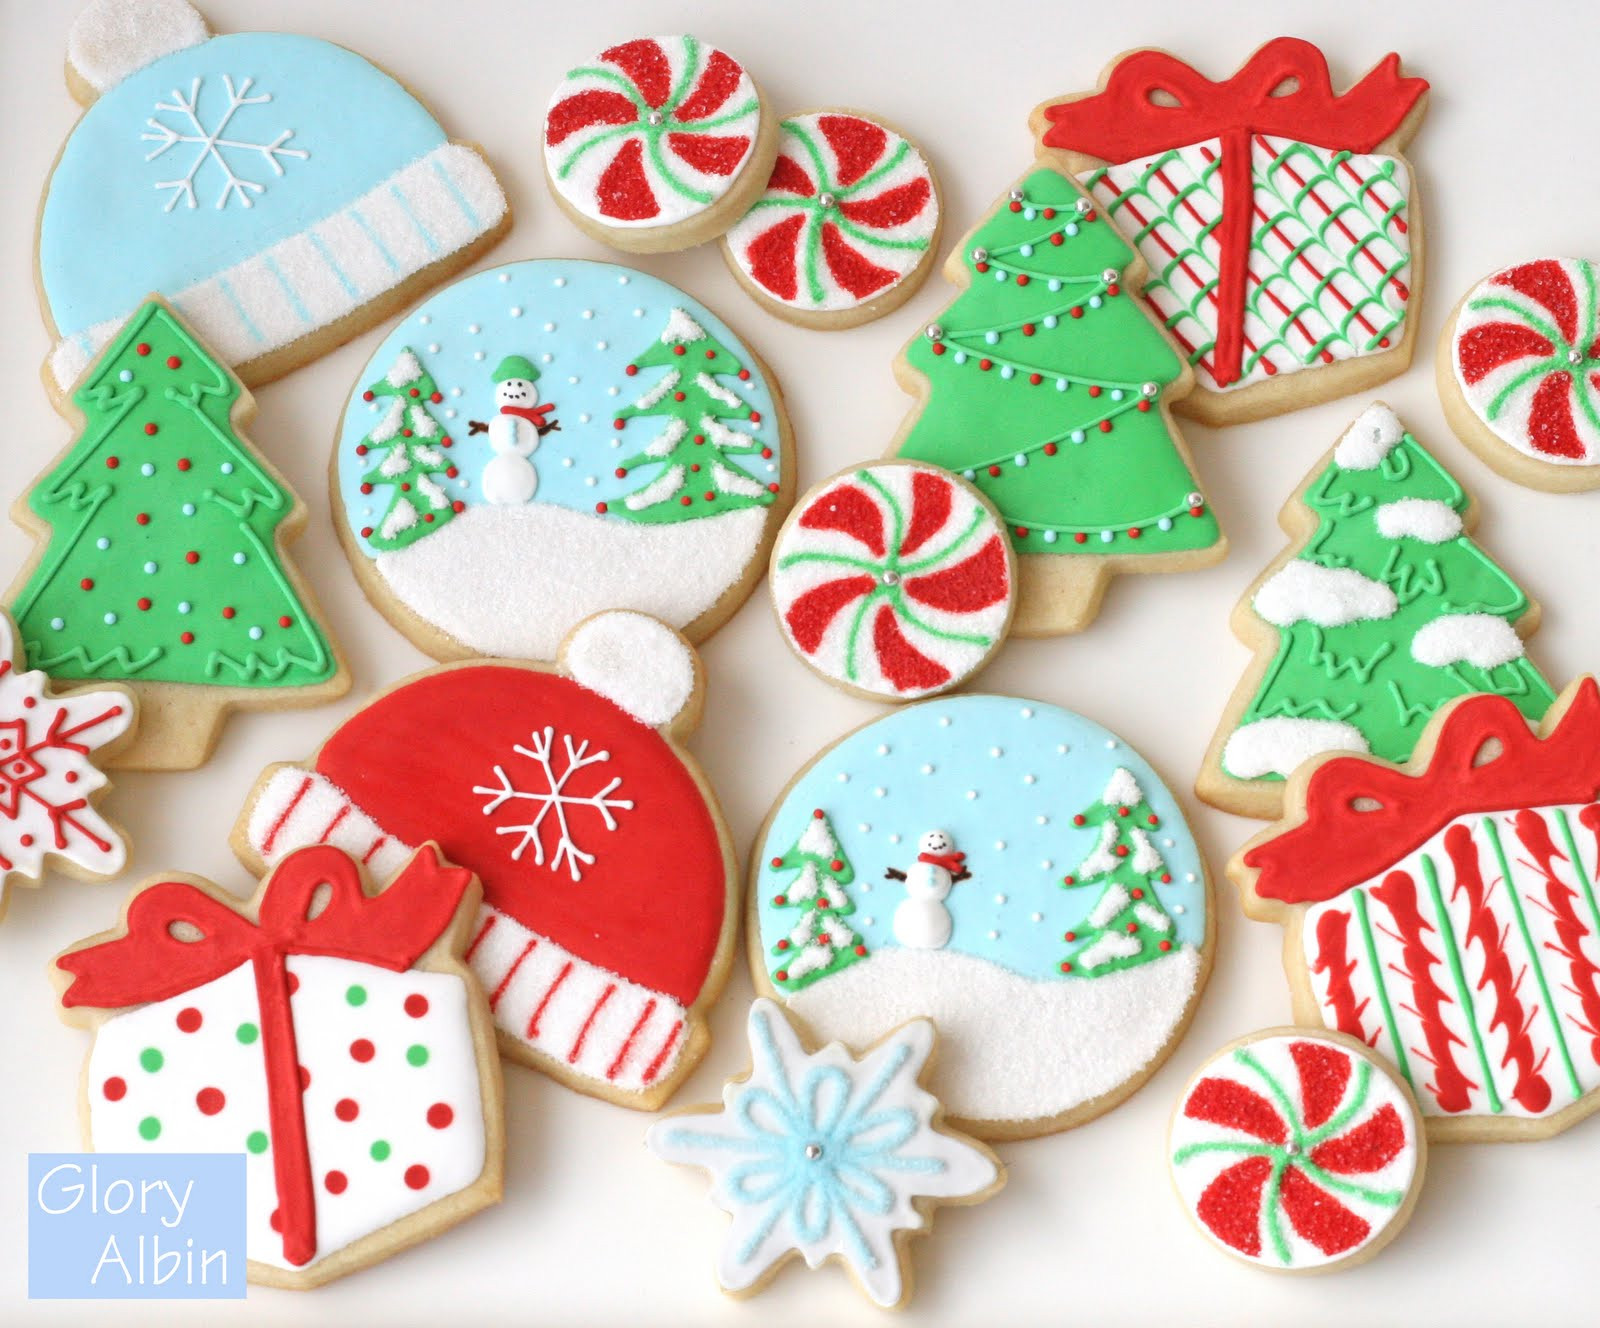 Royal Icing Cookies Recipe
 Decorating Sugar Cookies with Royal Icing – Glorious Treats